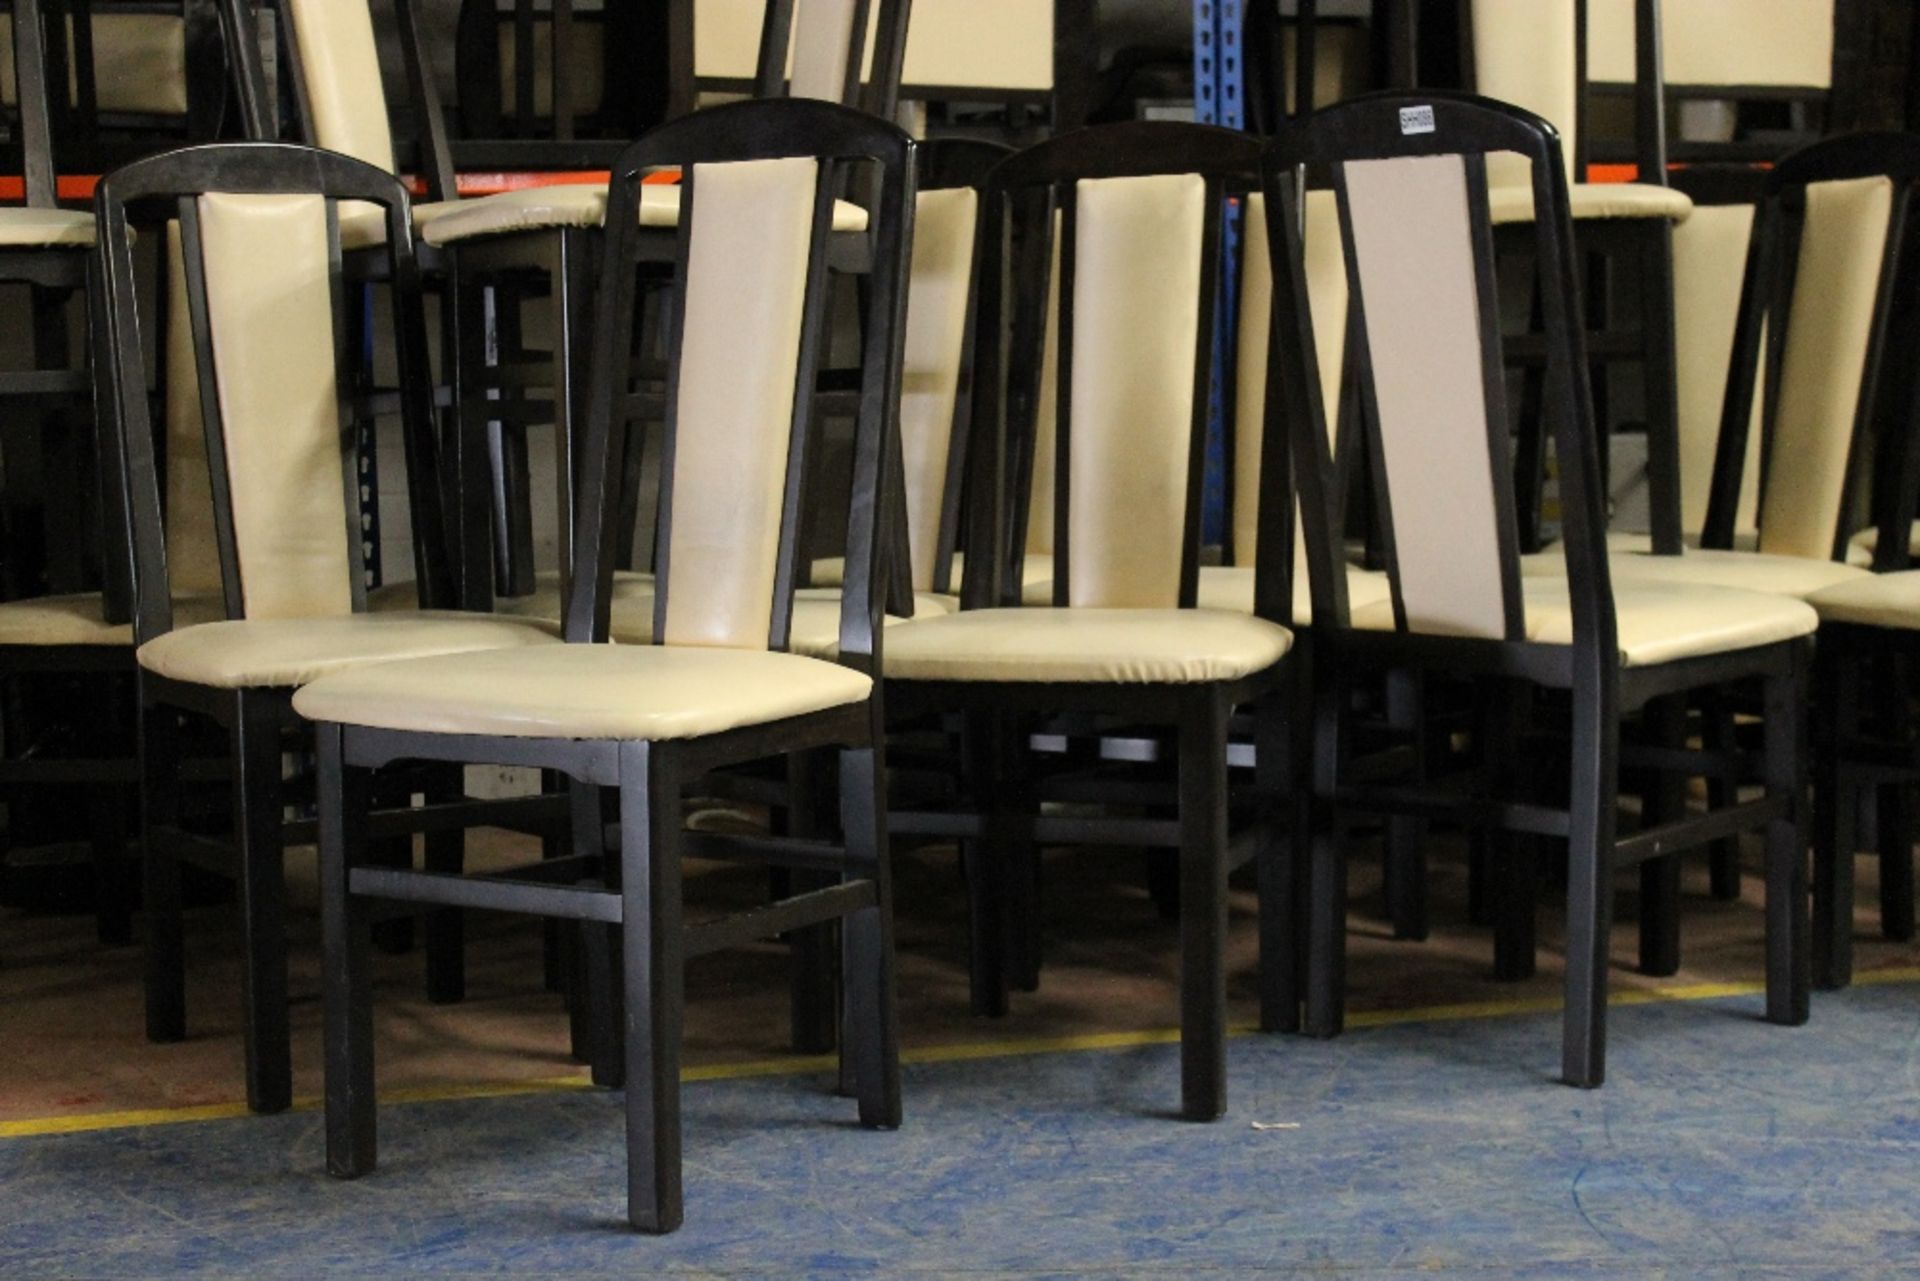 Job Lot of 54 Restaurant Dining Chairs – Dark Wood & Cream Vinyl - Image 3 of 4